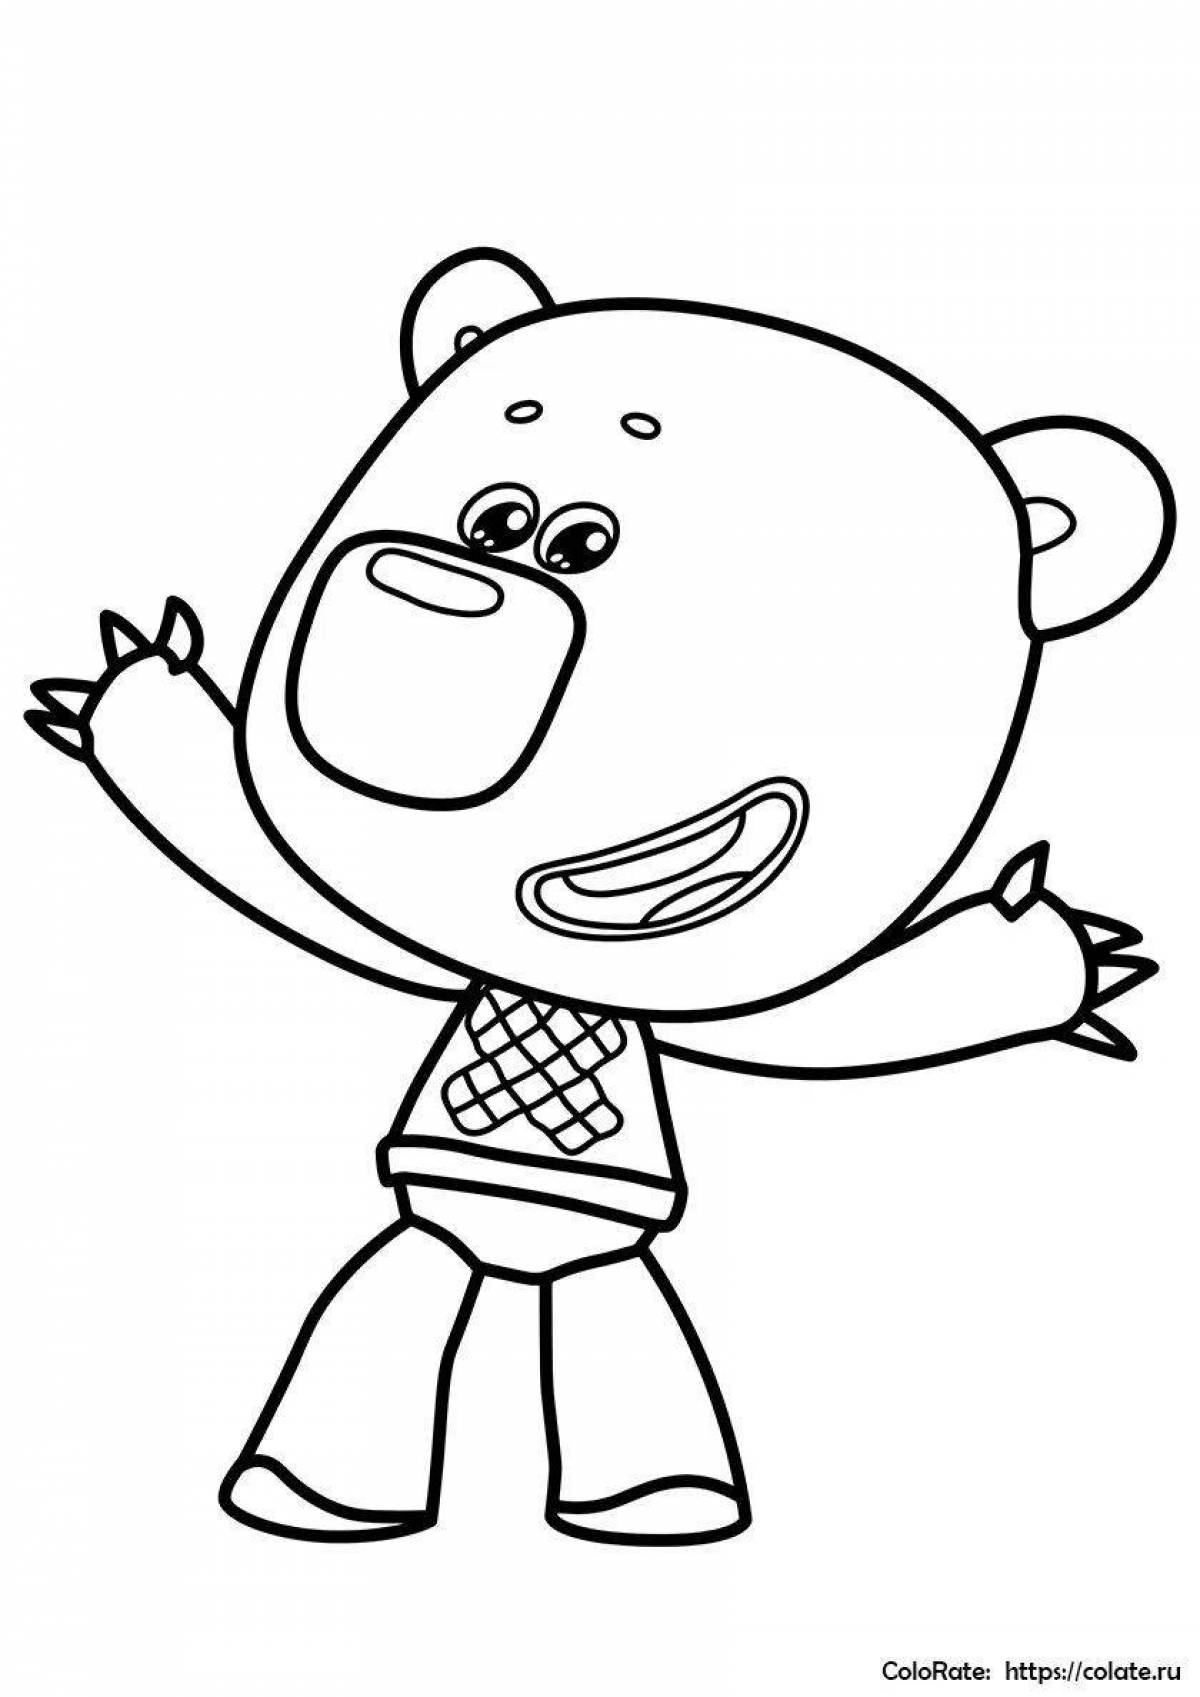 Coloring grinning bear cub